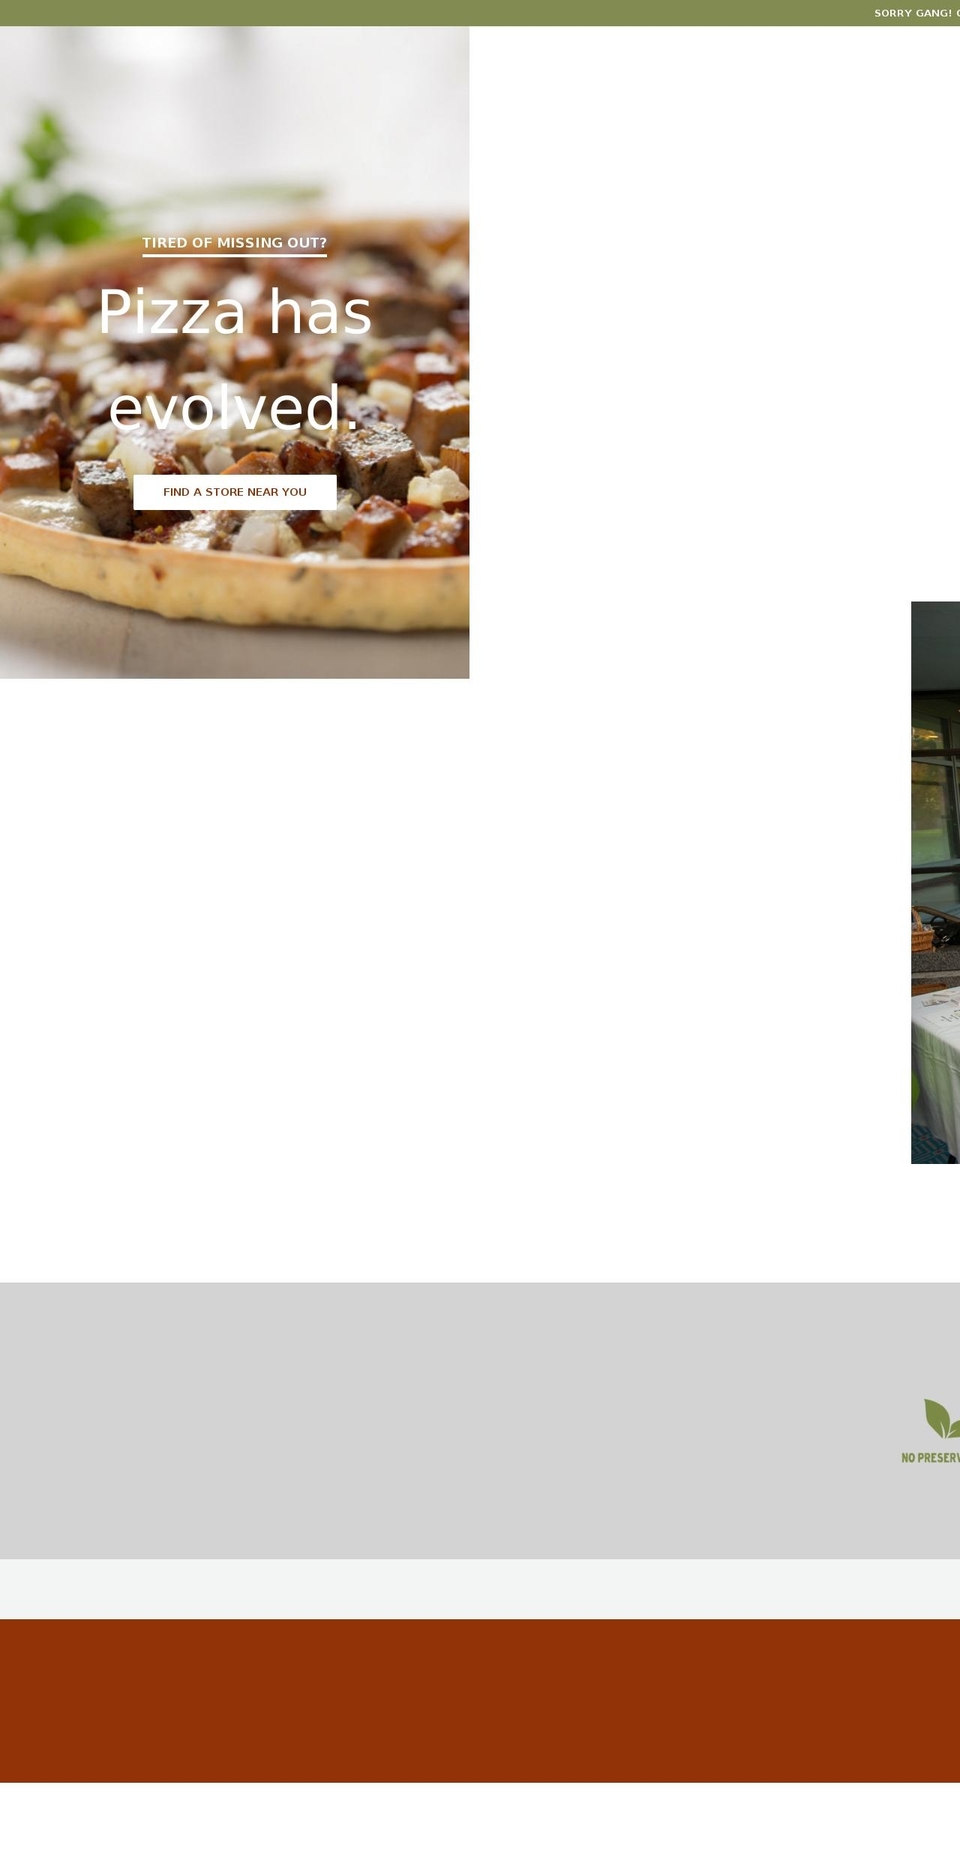 paleopizza.us shopify website screenshot